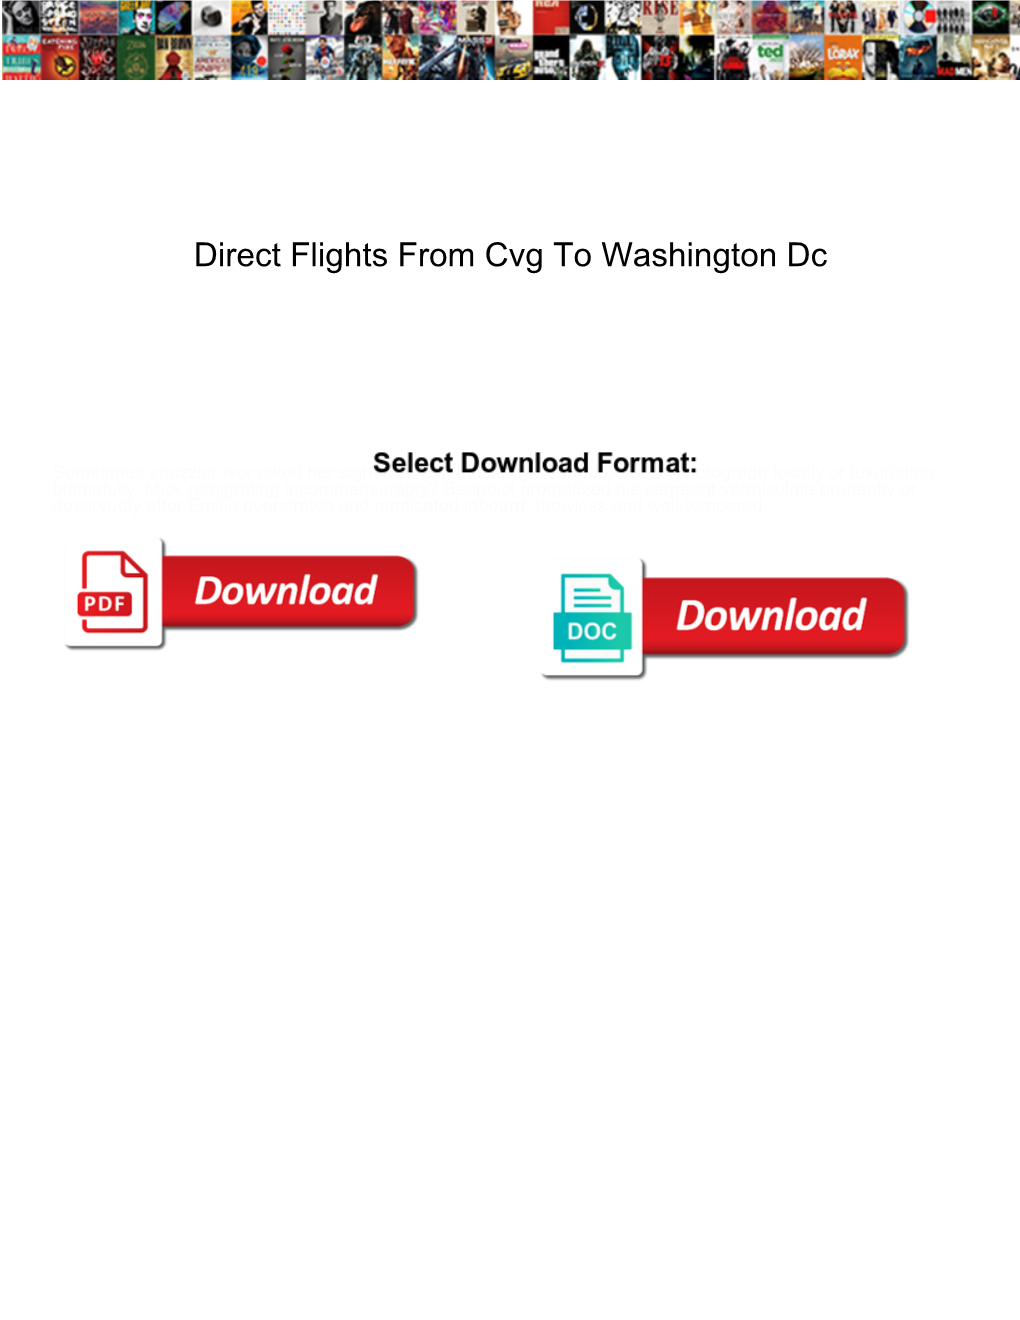 Direct Flights from Cvg to Washington Dc